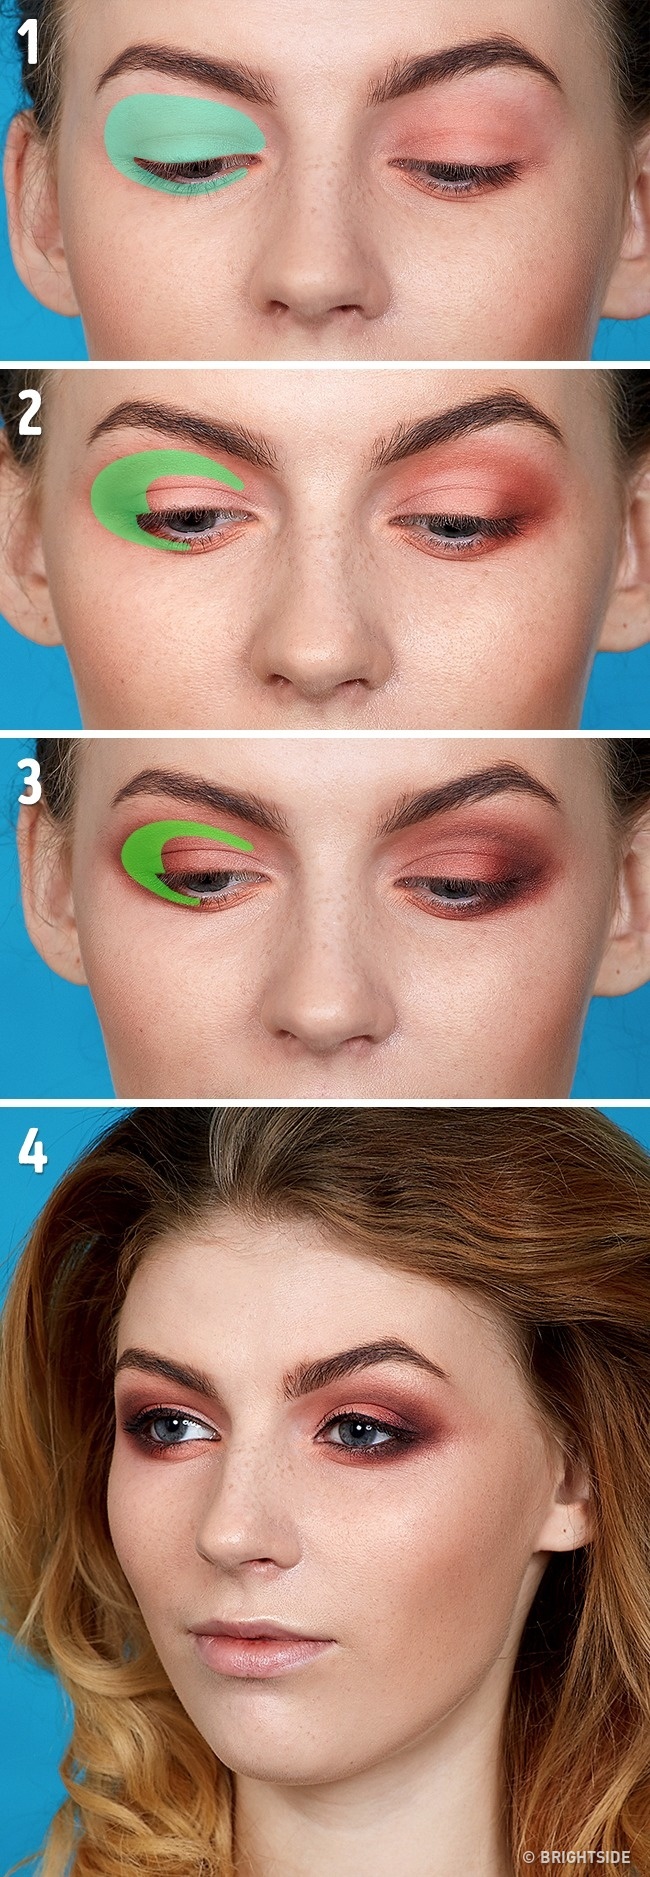 klasicna tehnika 5 ključnih tehnika šminkanja koje treba da savladaš